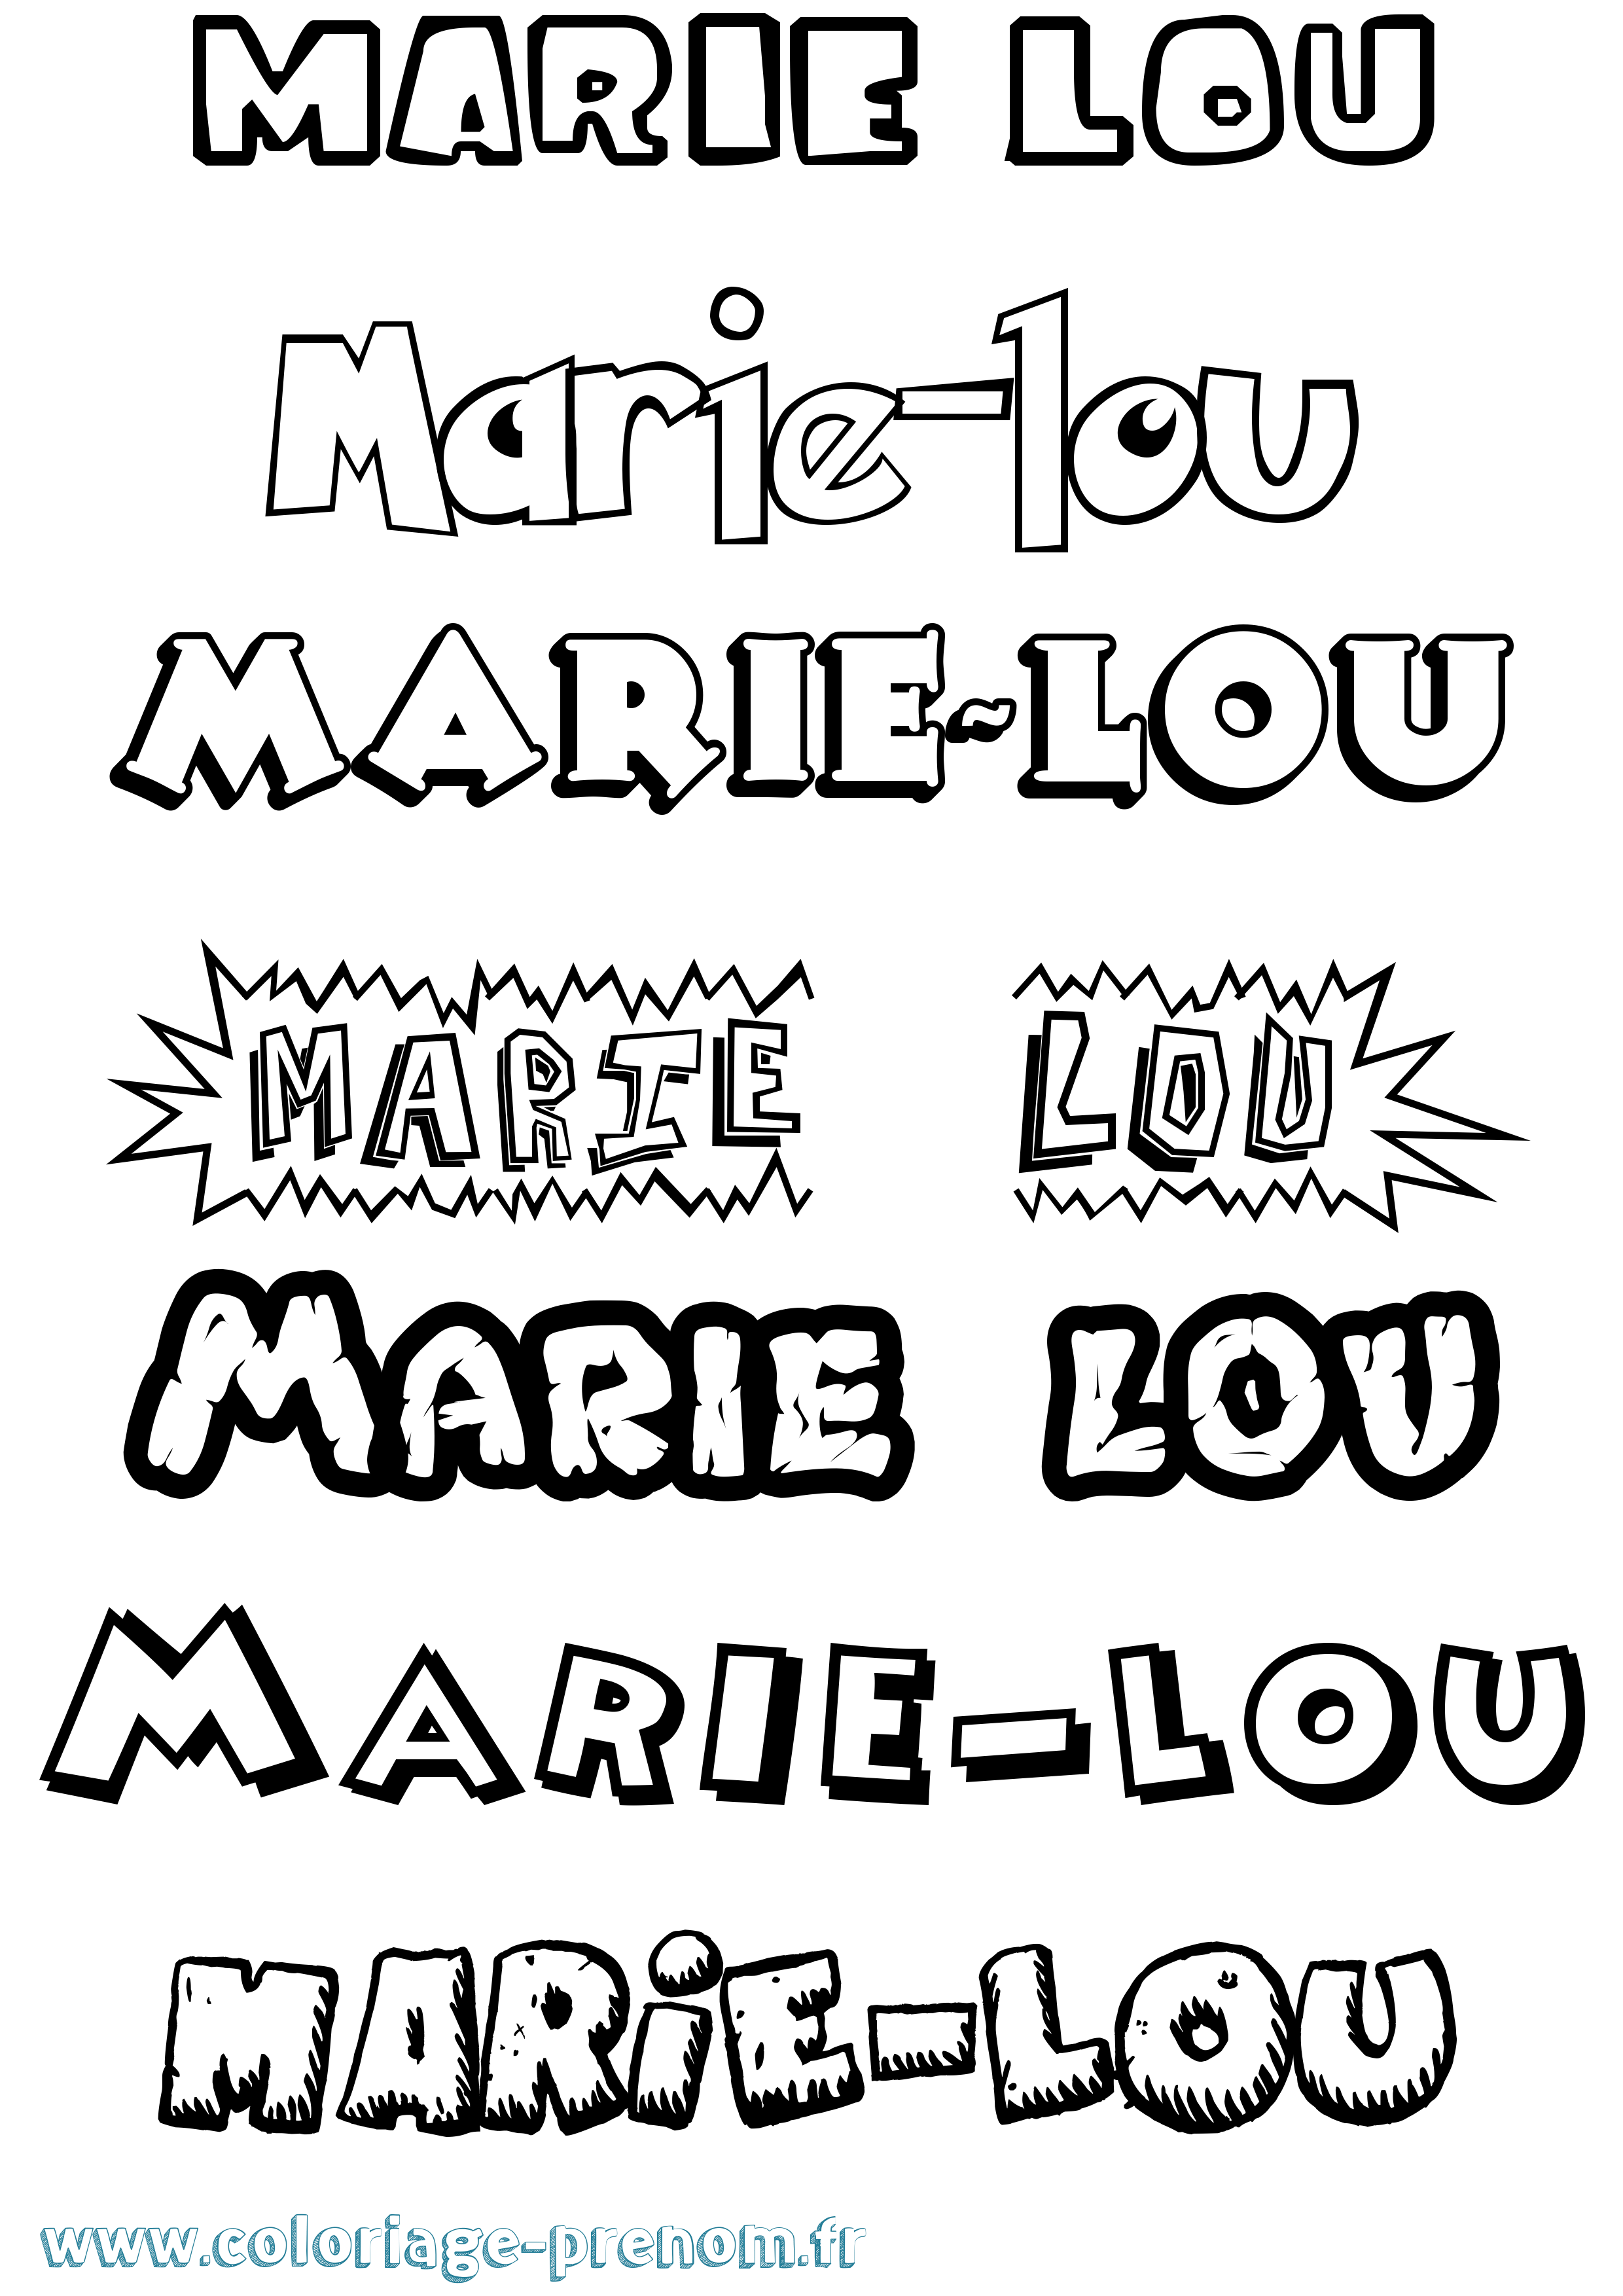 Coloriage prénom Marie-Lou